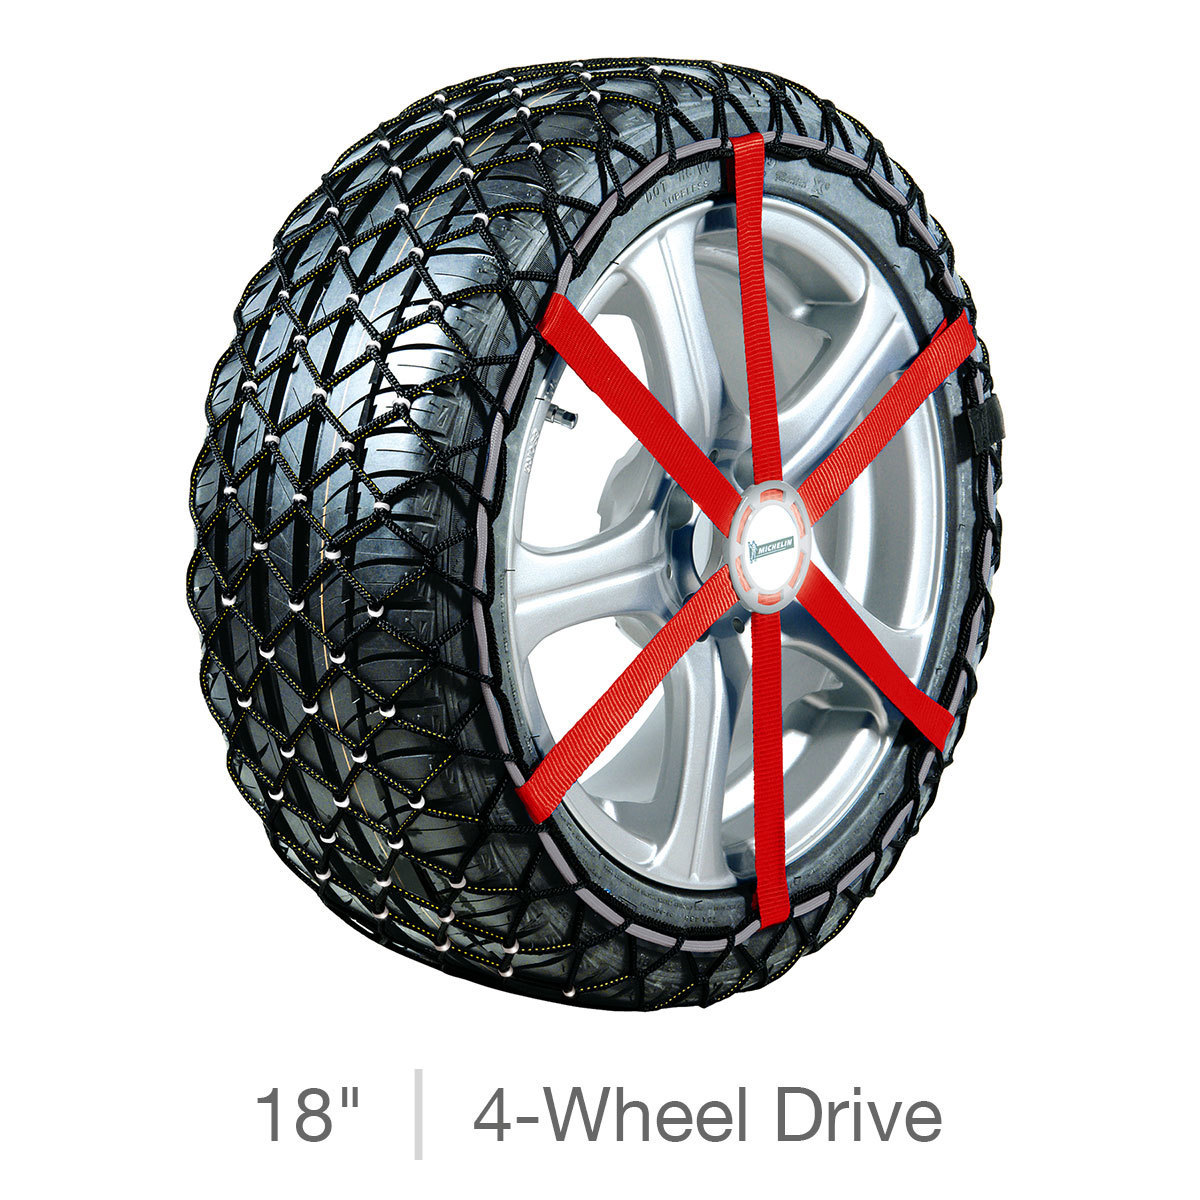 Michelin Snow Chains for 18" Wheels 4-Wheel Drive Cars